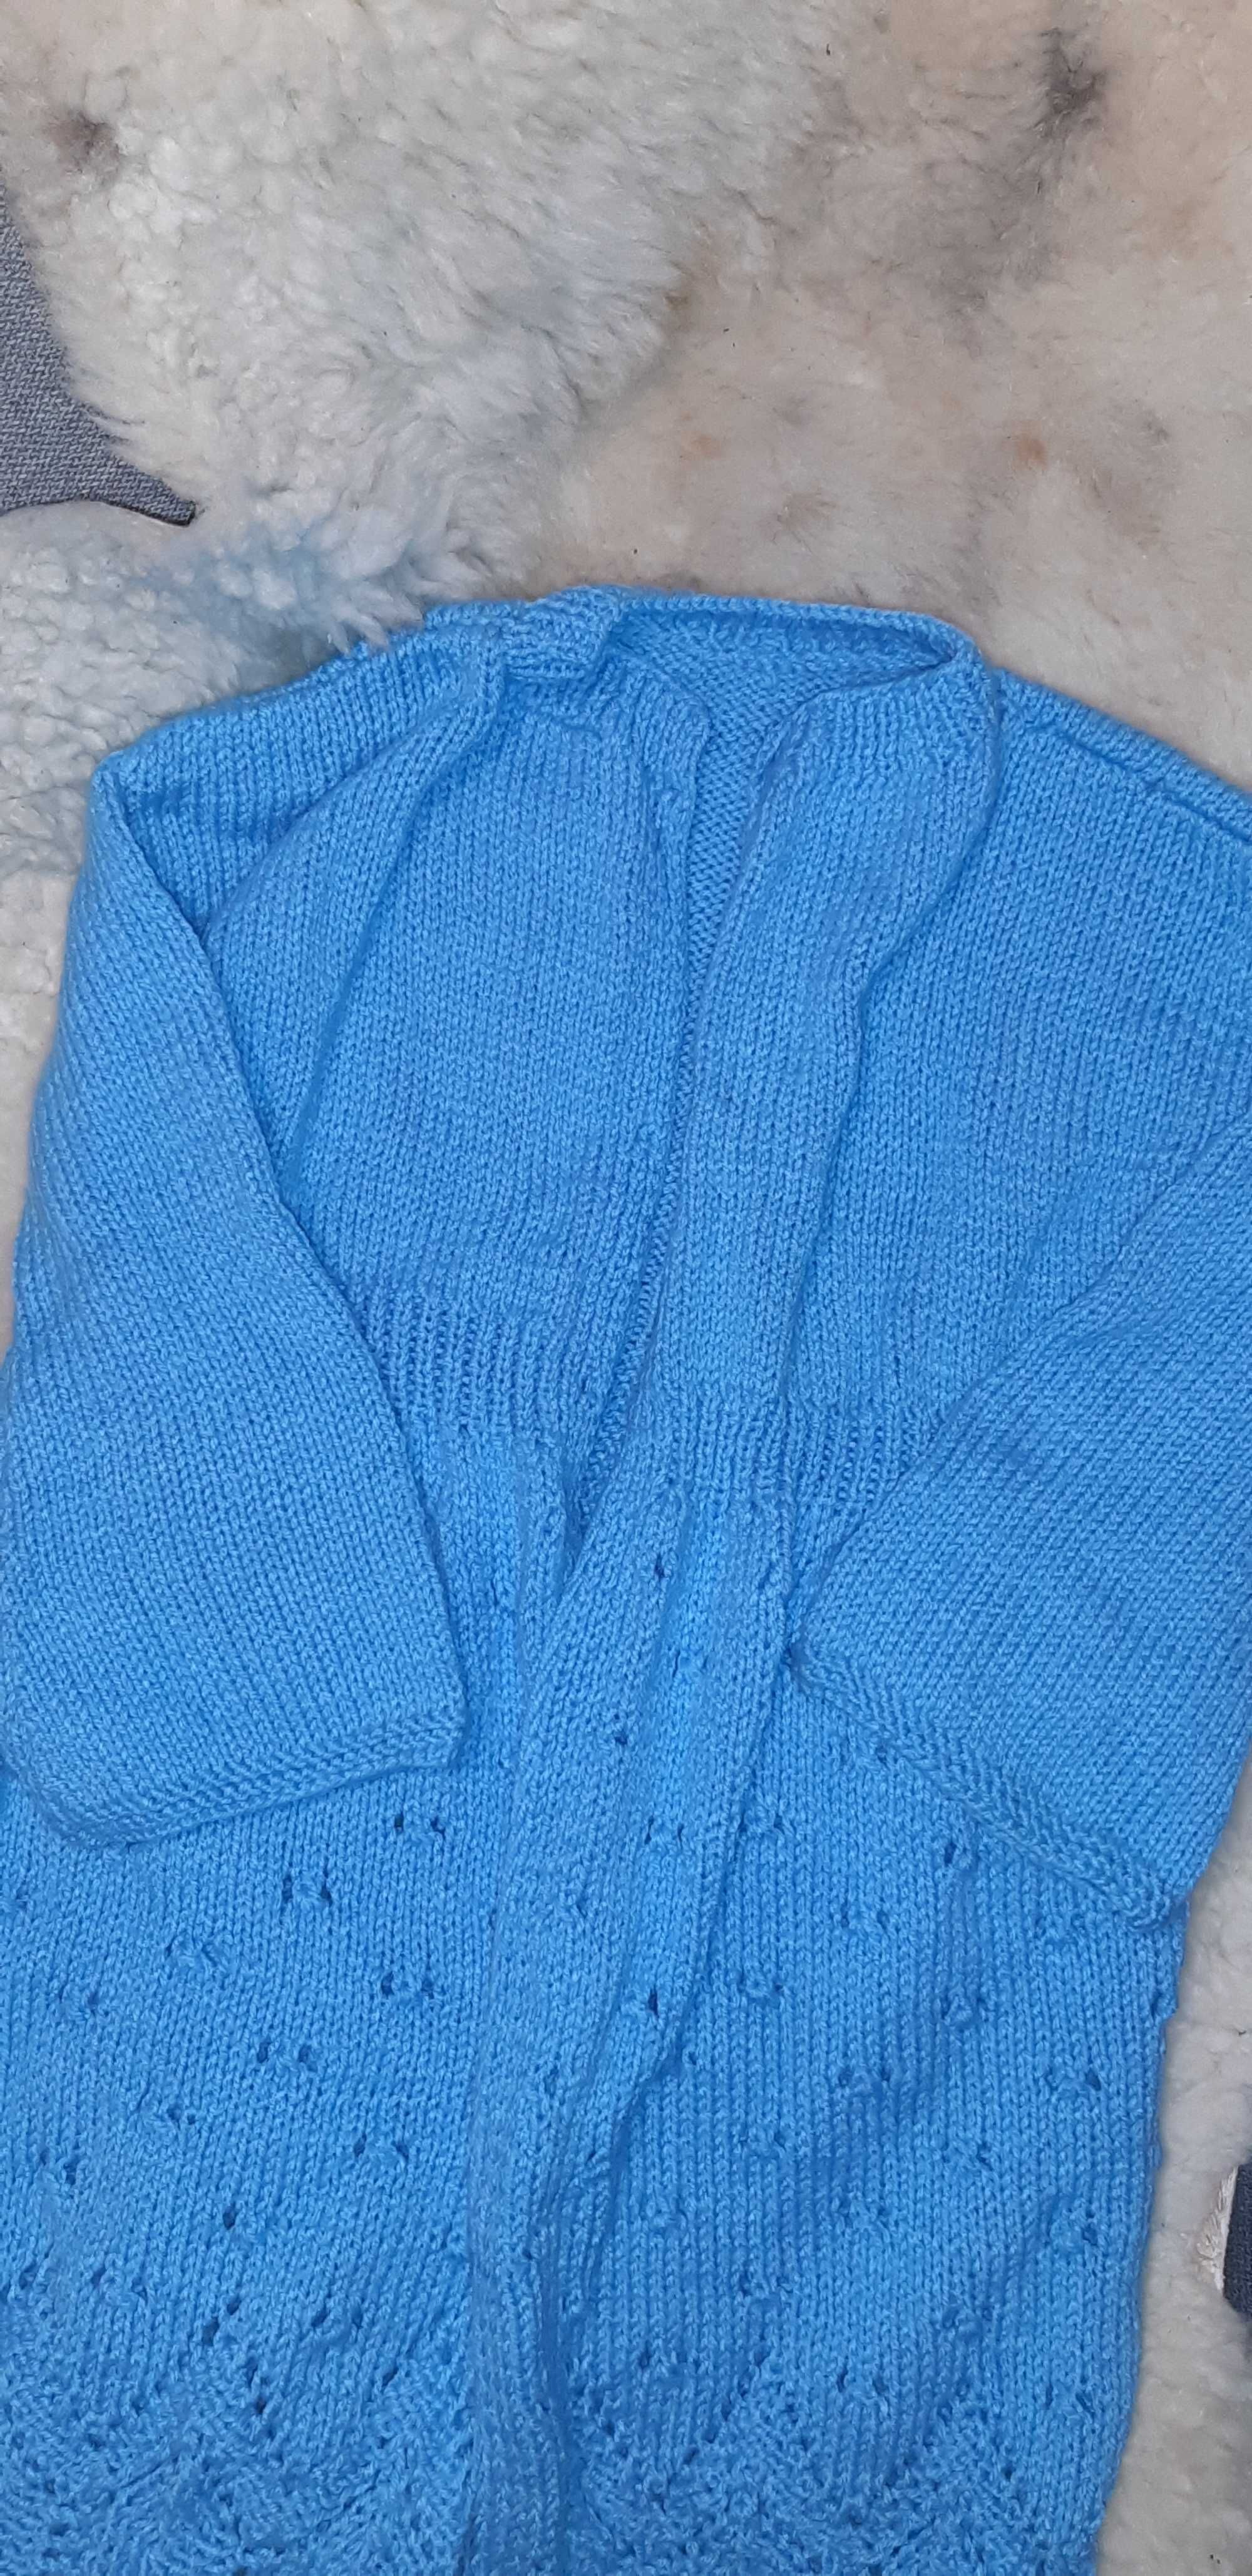 Piękny niebieski sweterek handmade r. 92